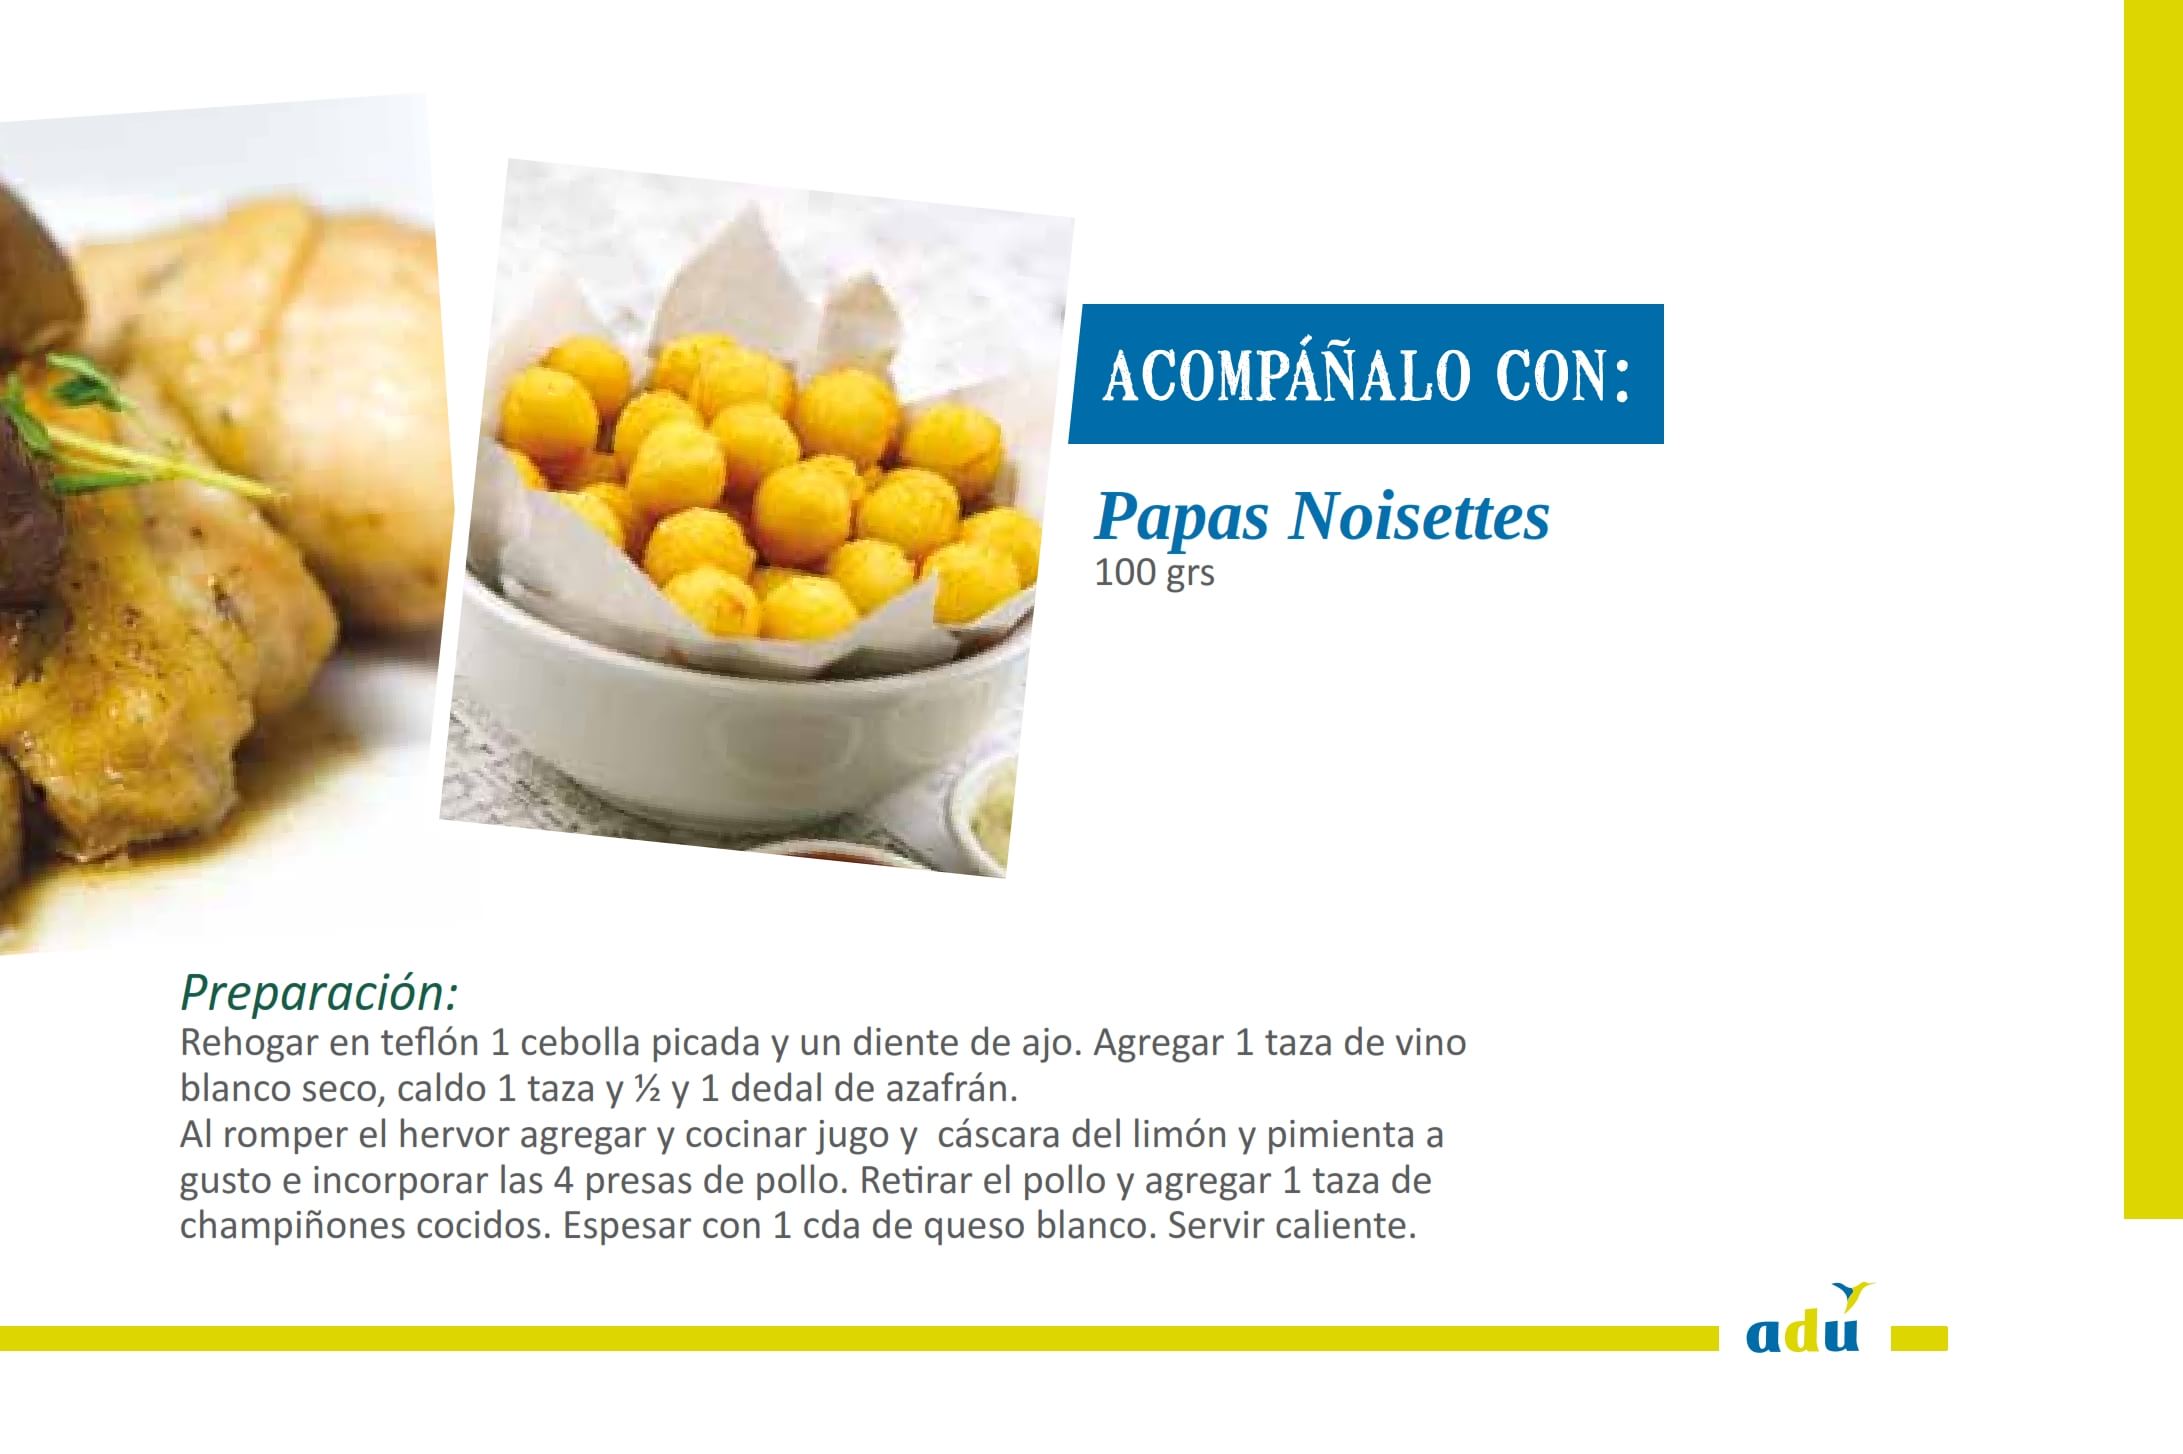 Pollo al limon con champinones y papas noisettes 002-min